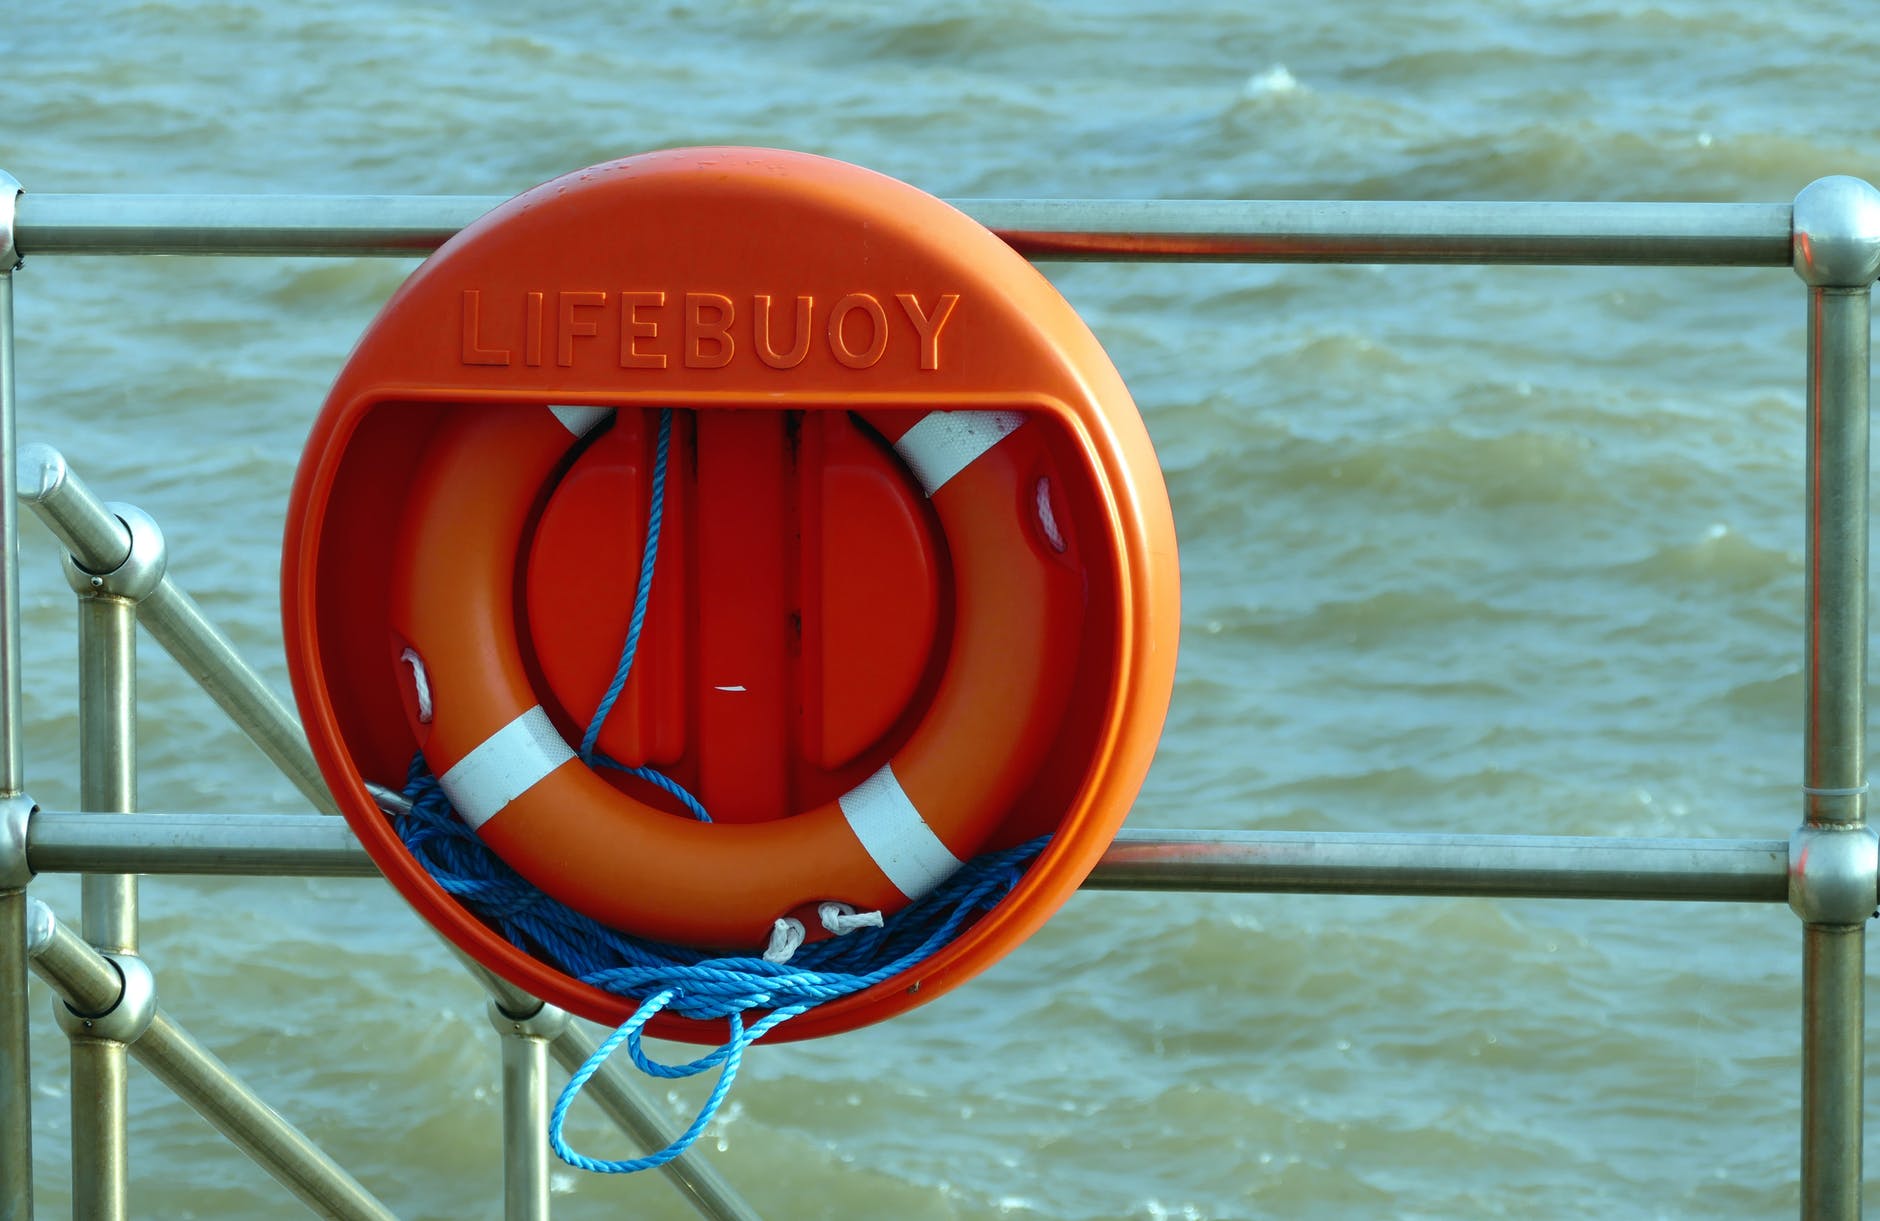 aid beach safety buoy close up